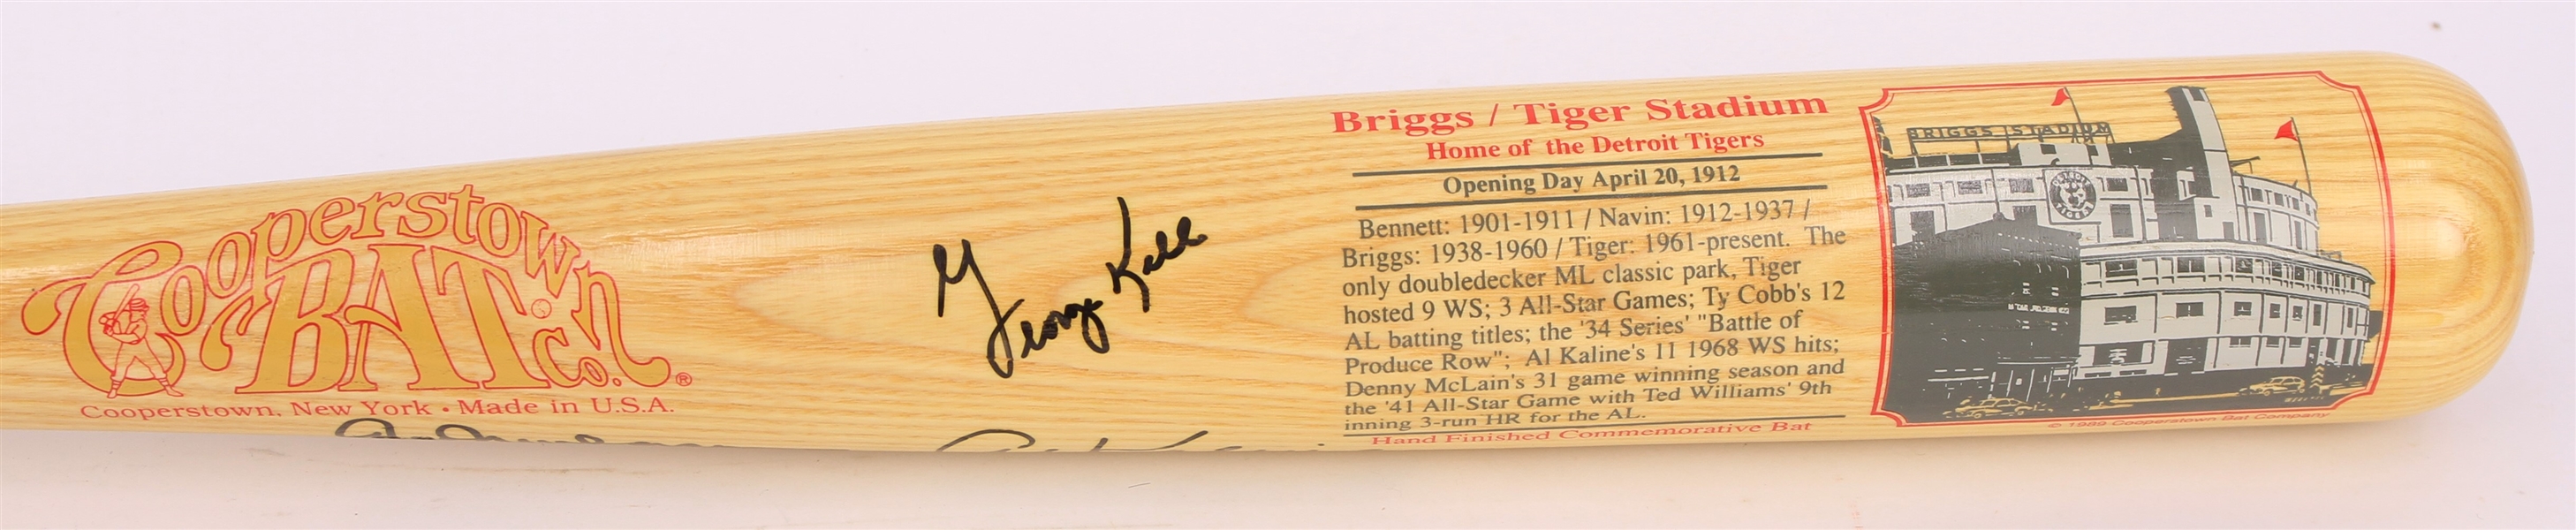 1989 Hal Newhouser Al Kaline George Kell Detroit Tigers Signed Cooperstown Collection Briggs/Tigers Stadium Bat (JSA)